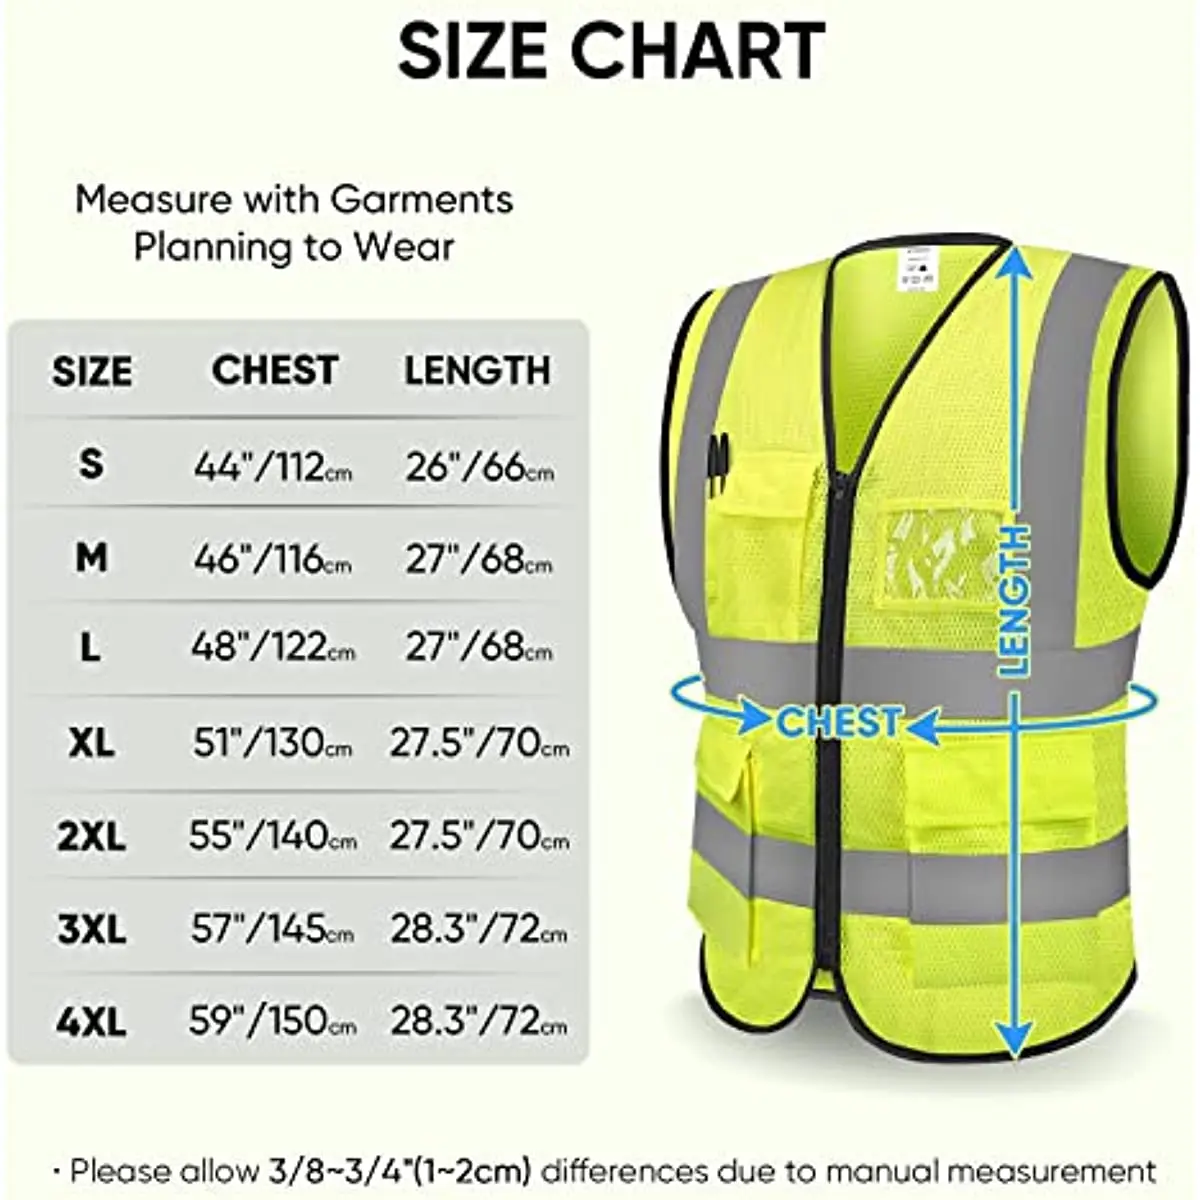 TICONN Reflective Safety Vest High Visibility Class 2 Mesh Vest for Women & Men Meets ANSI Standards enlarge